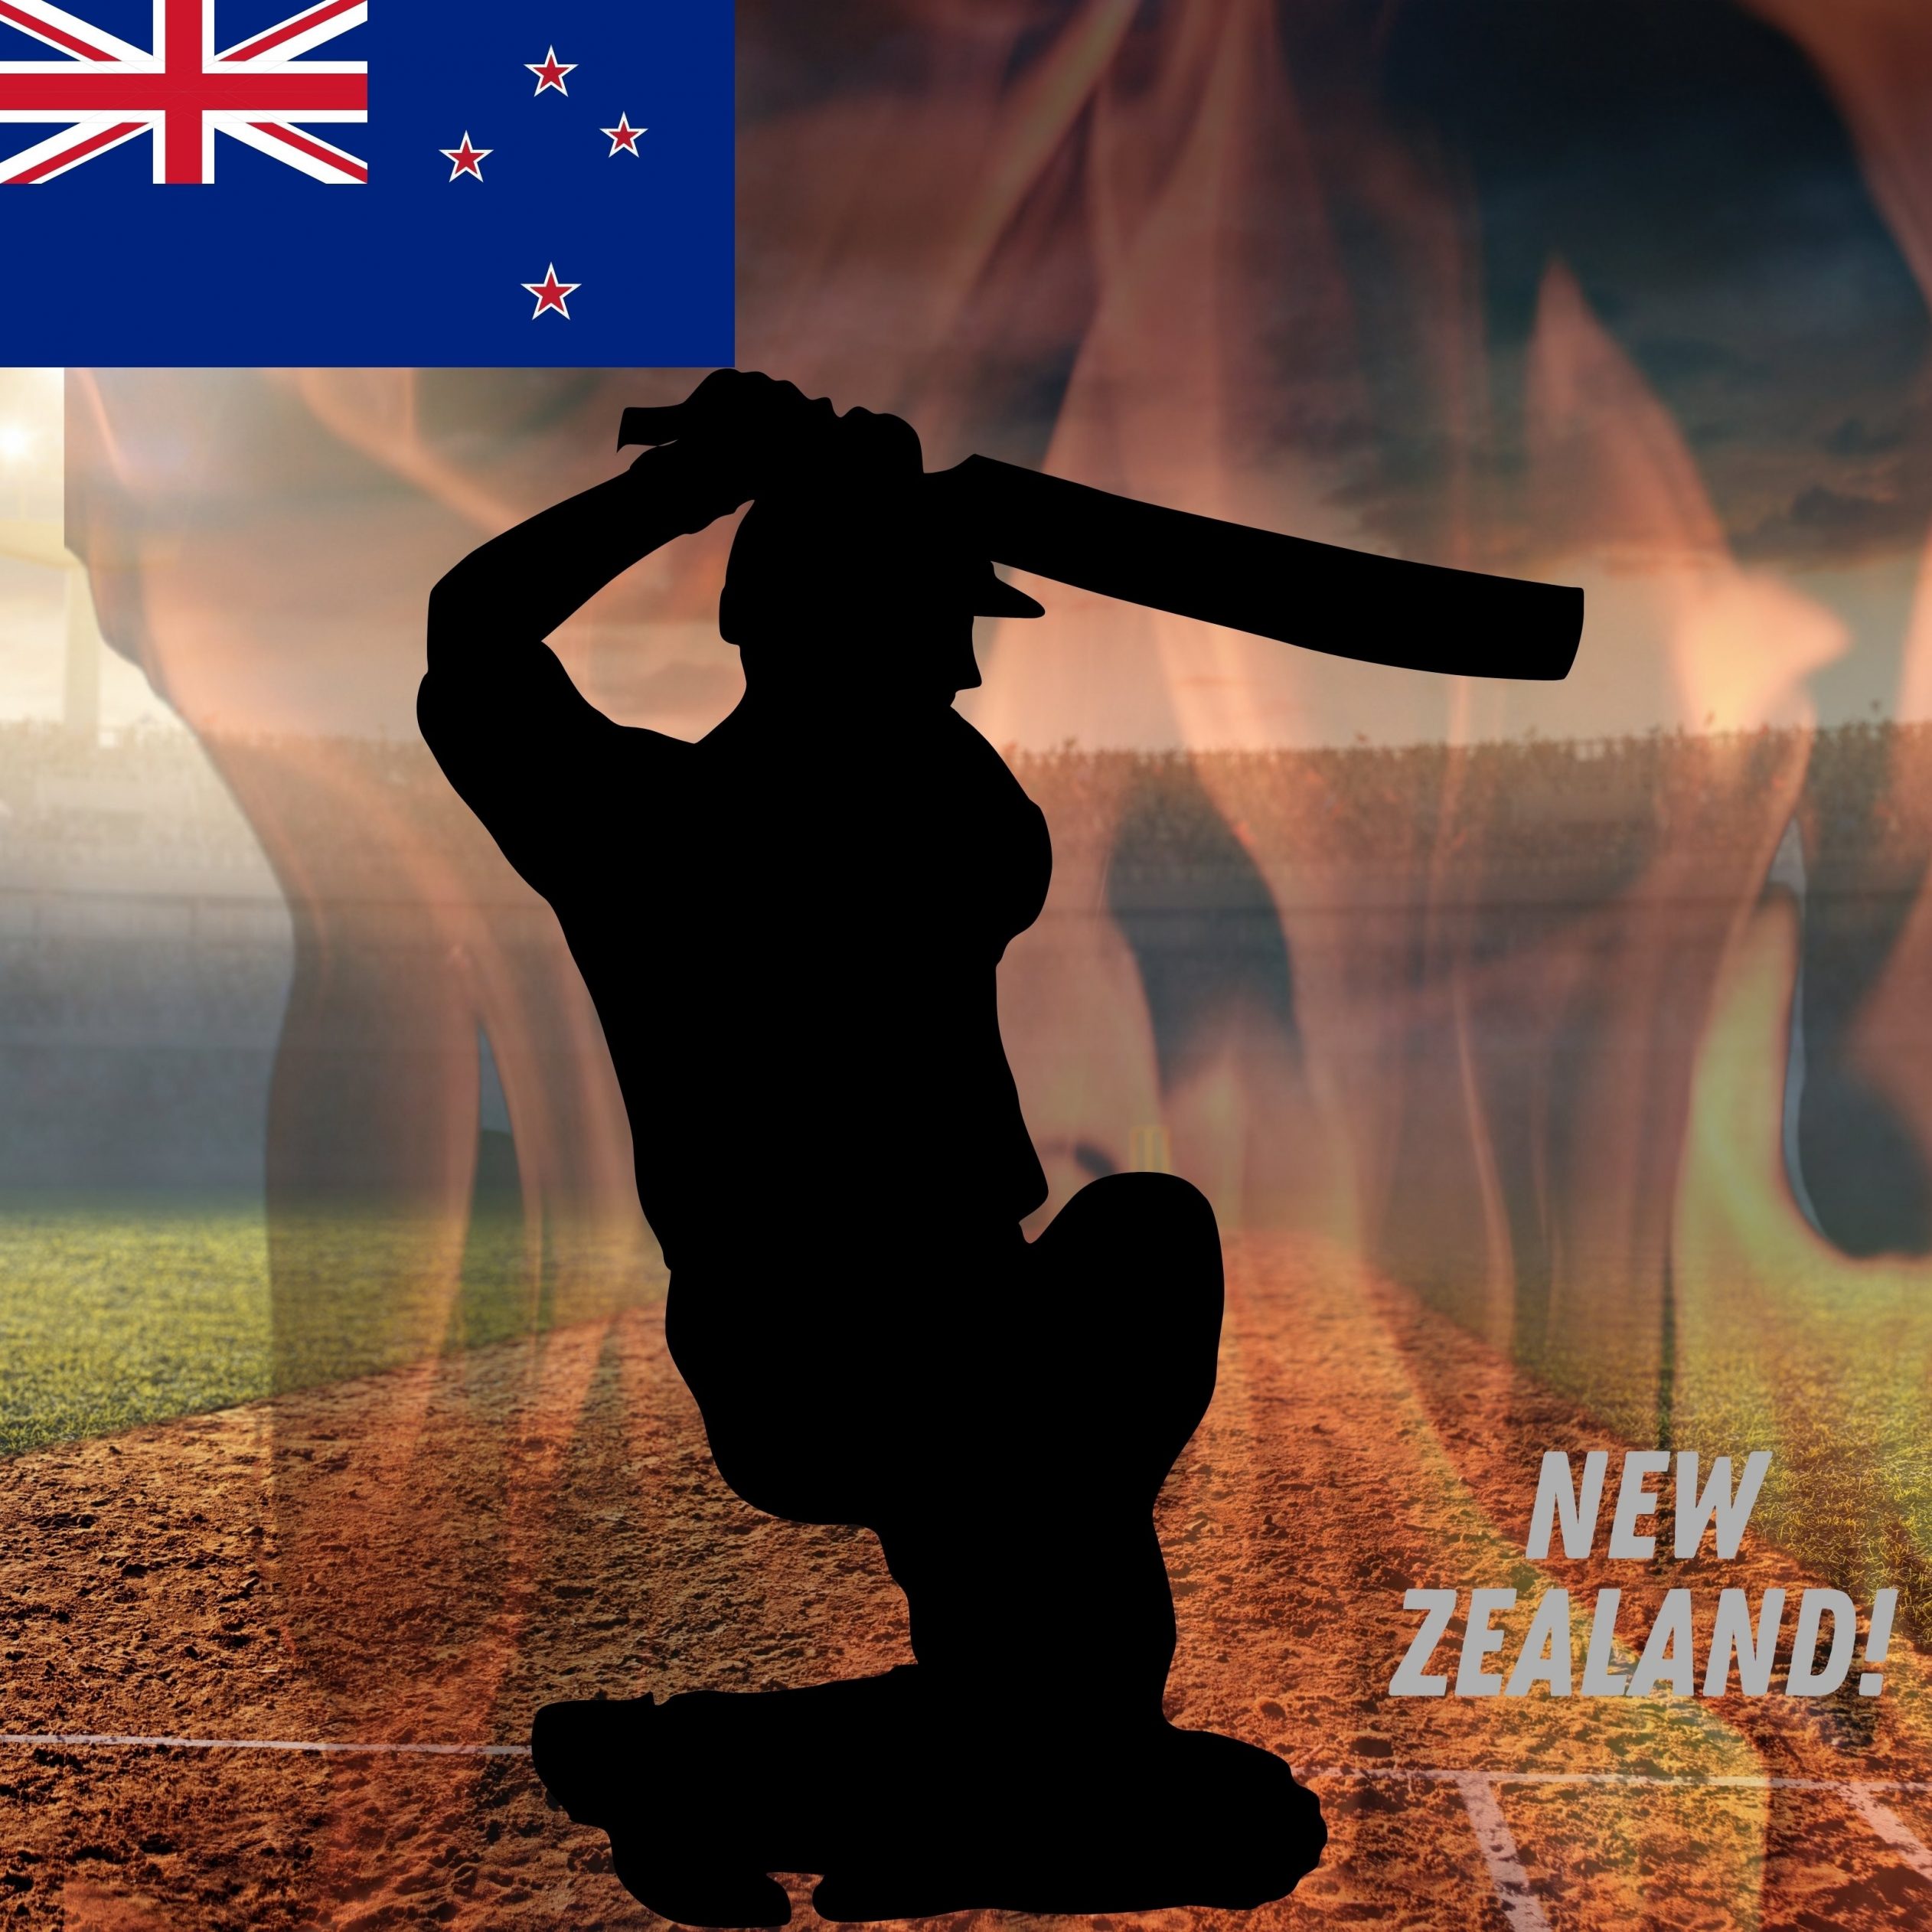 2524x2524 Parallax wallpaper 4k New Zealand Cricket Stadium iPad Wallpaper 2524x2524 pixels resolution